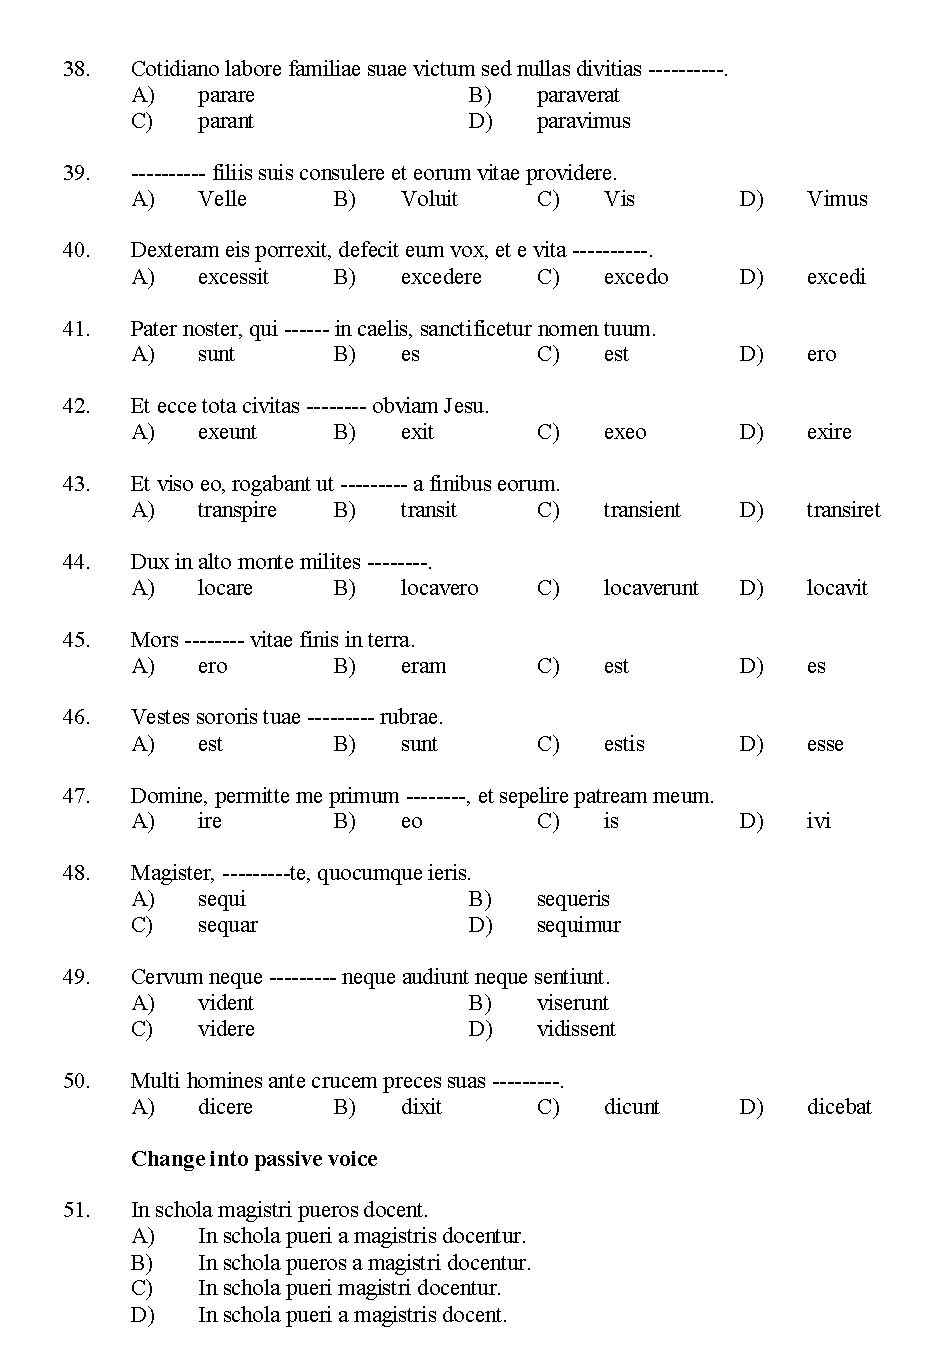 Kerala SET Latin Exam 2016 Question Code 16119 A 4